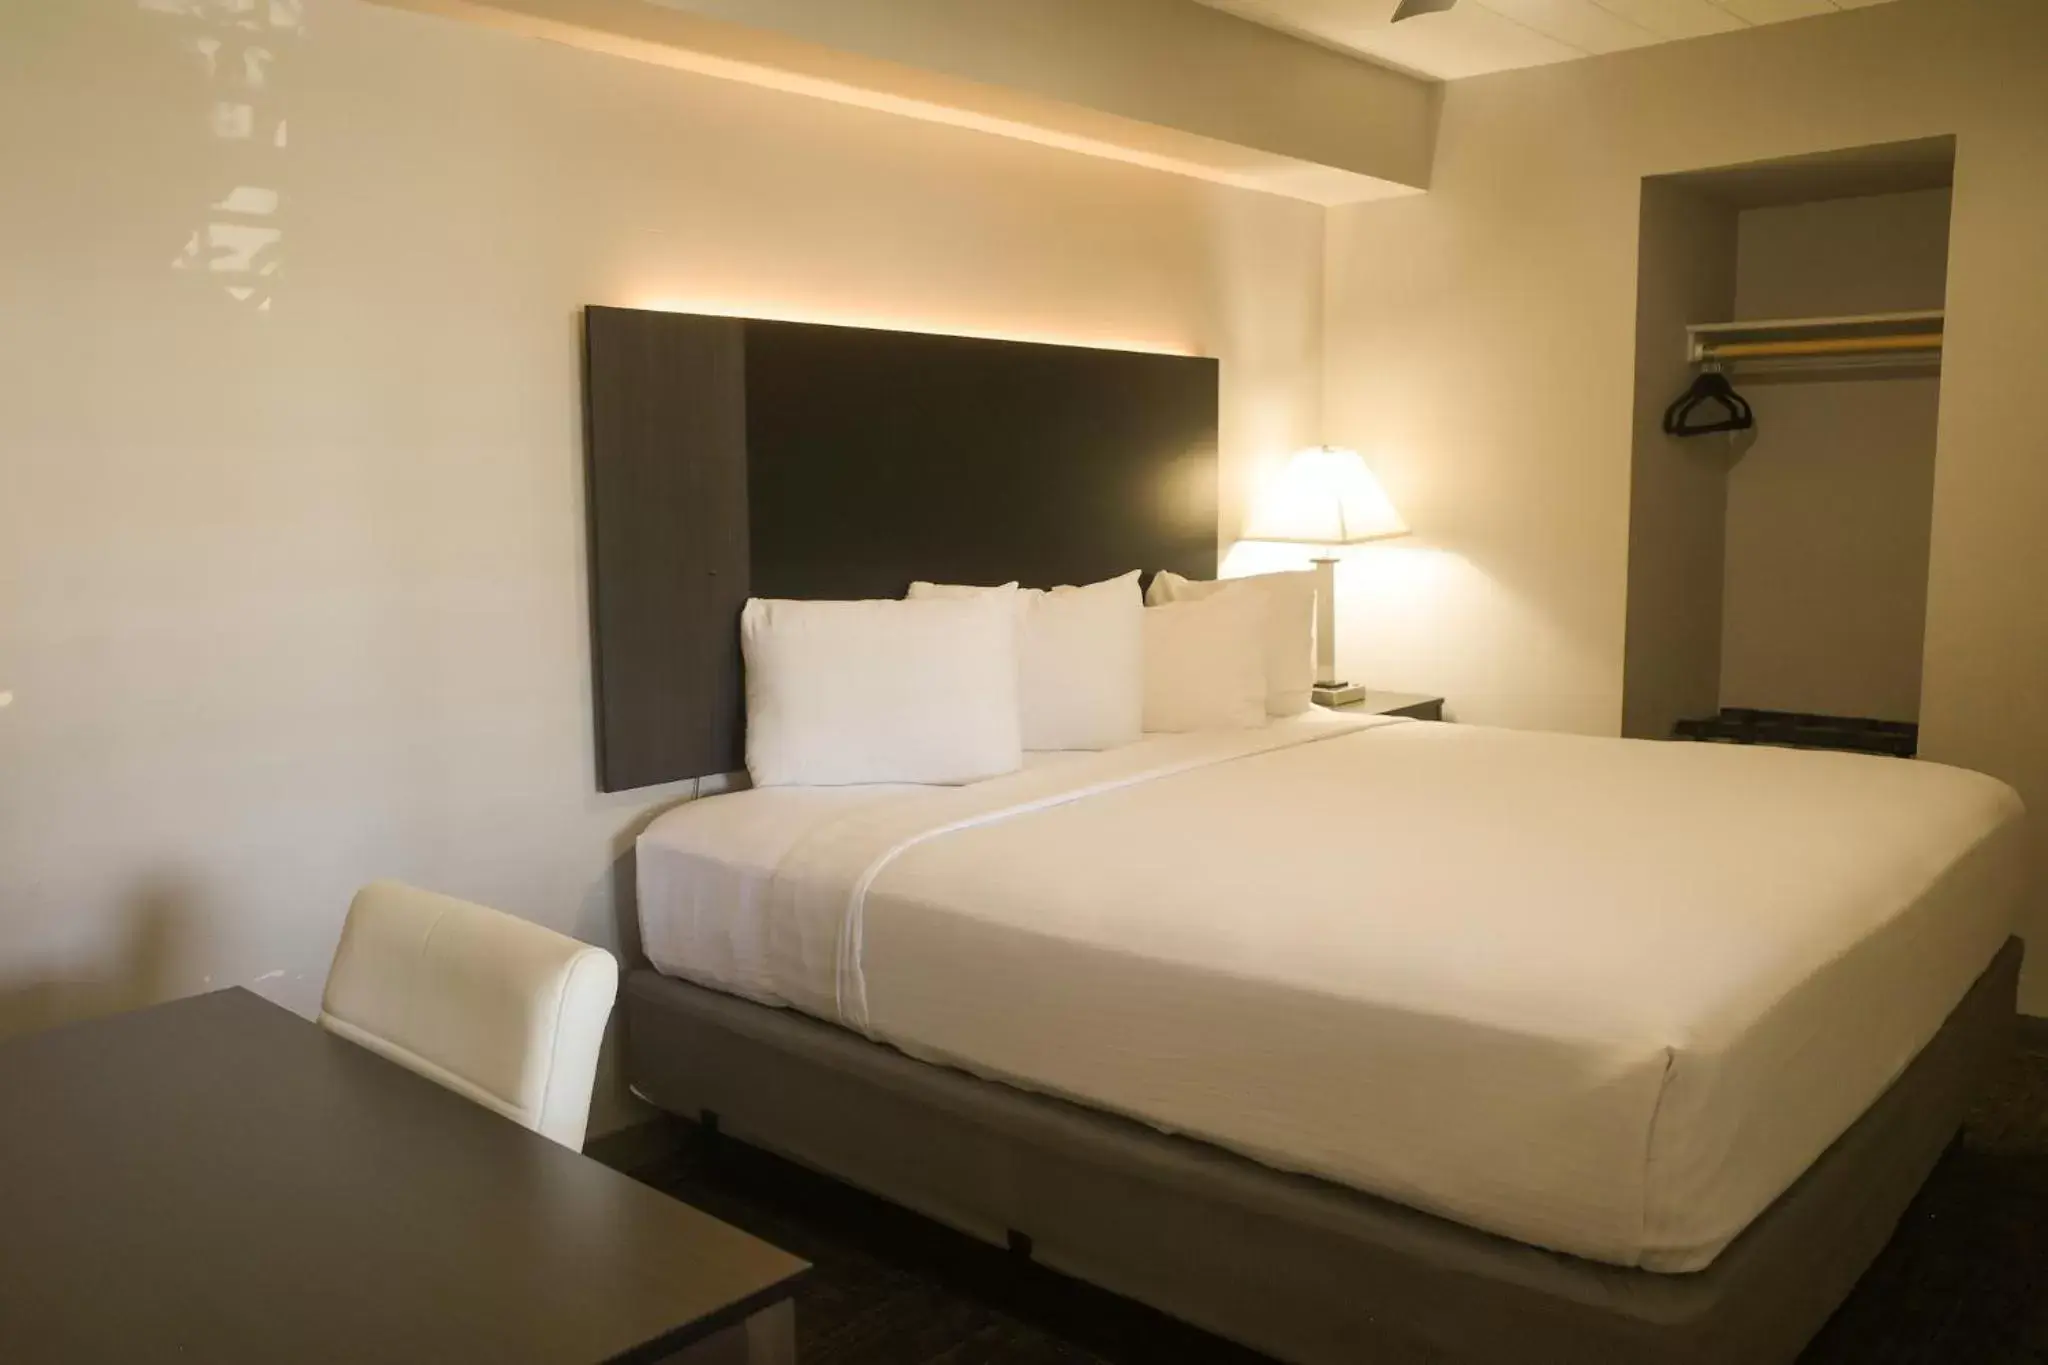 Bed in Americana Modern Hotel